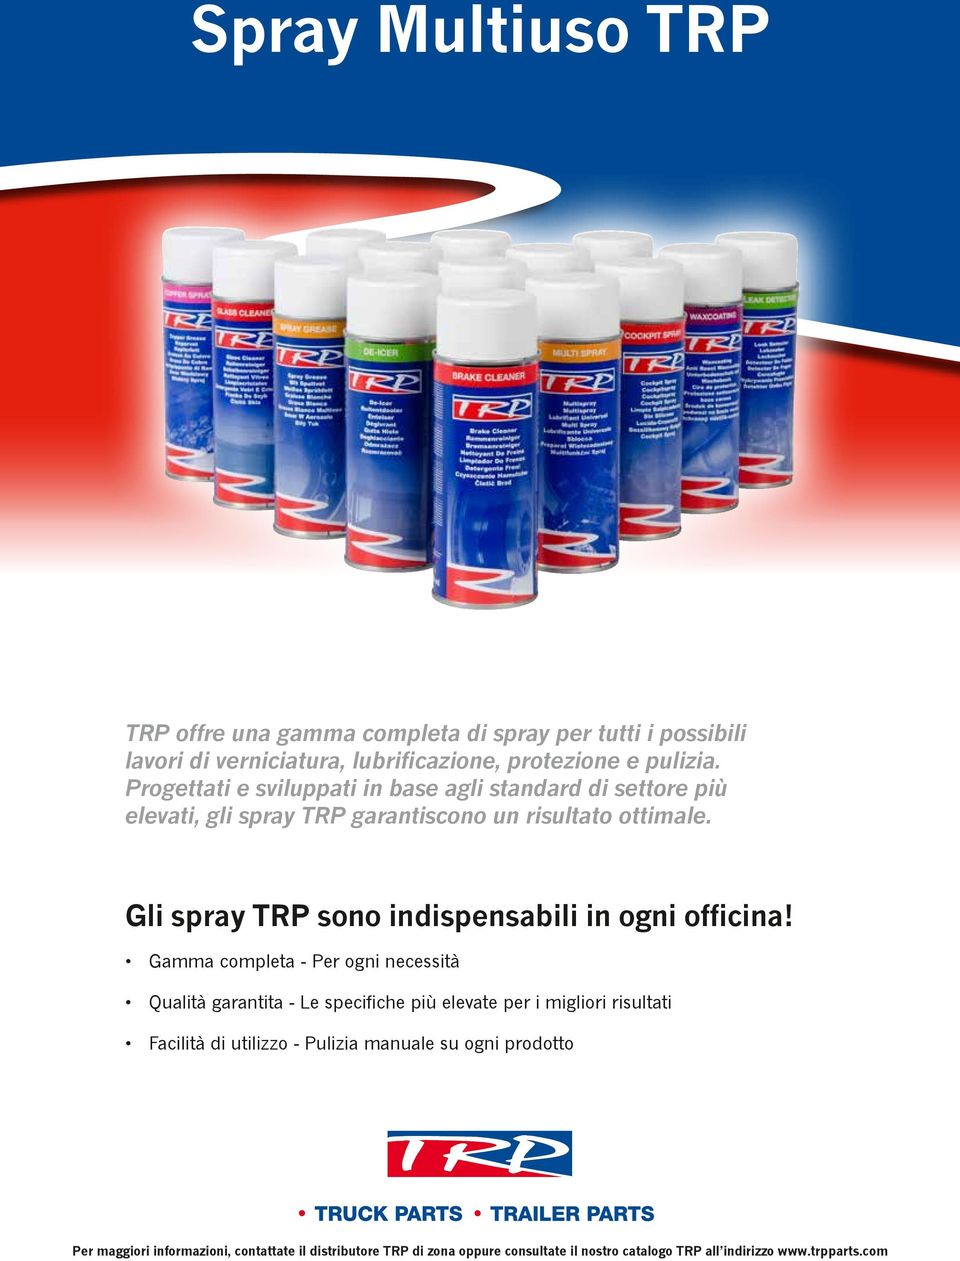 Gli spray TRP sono indispensabili in ogni officina!